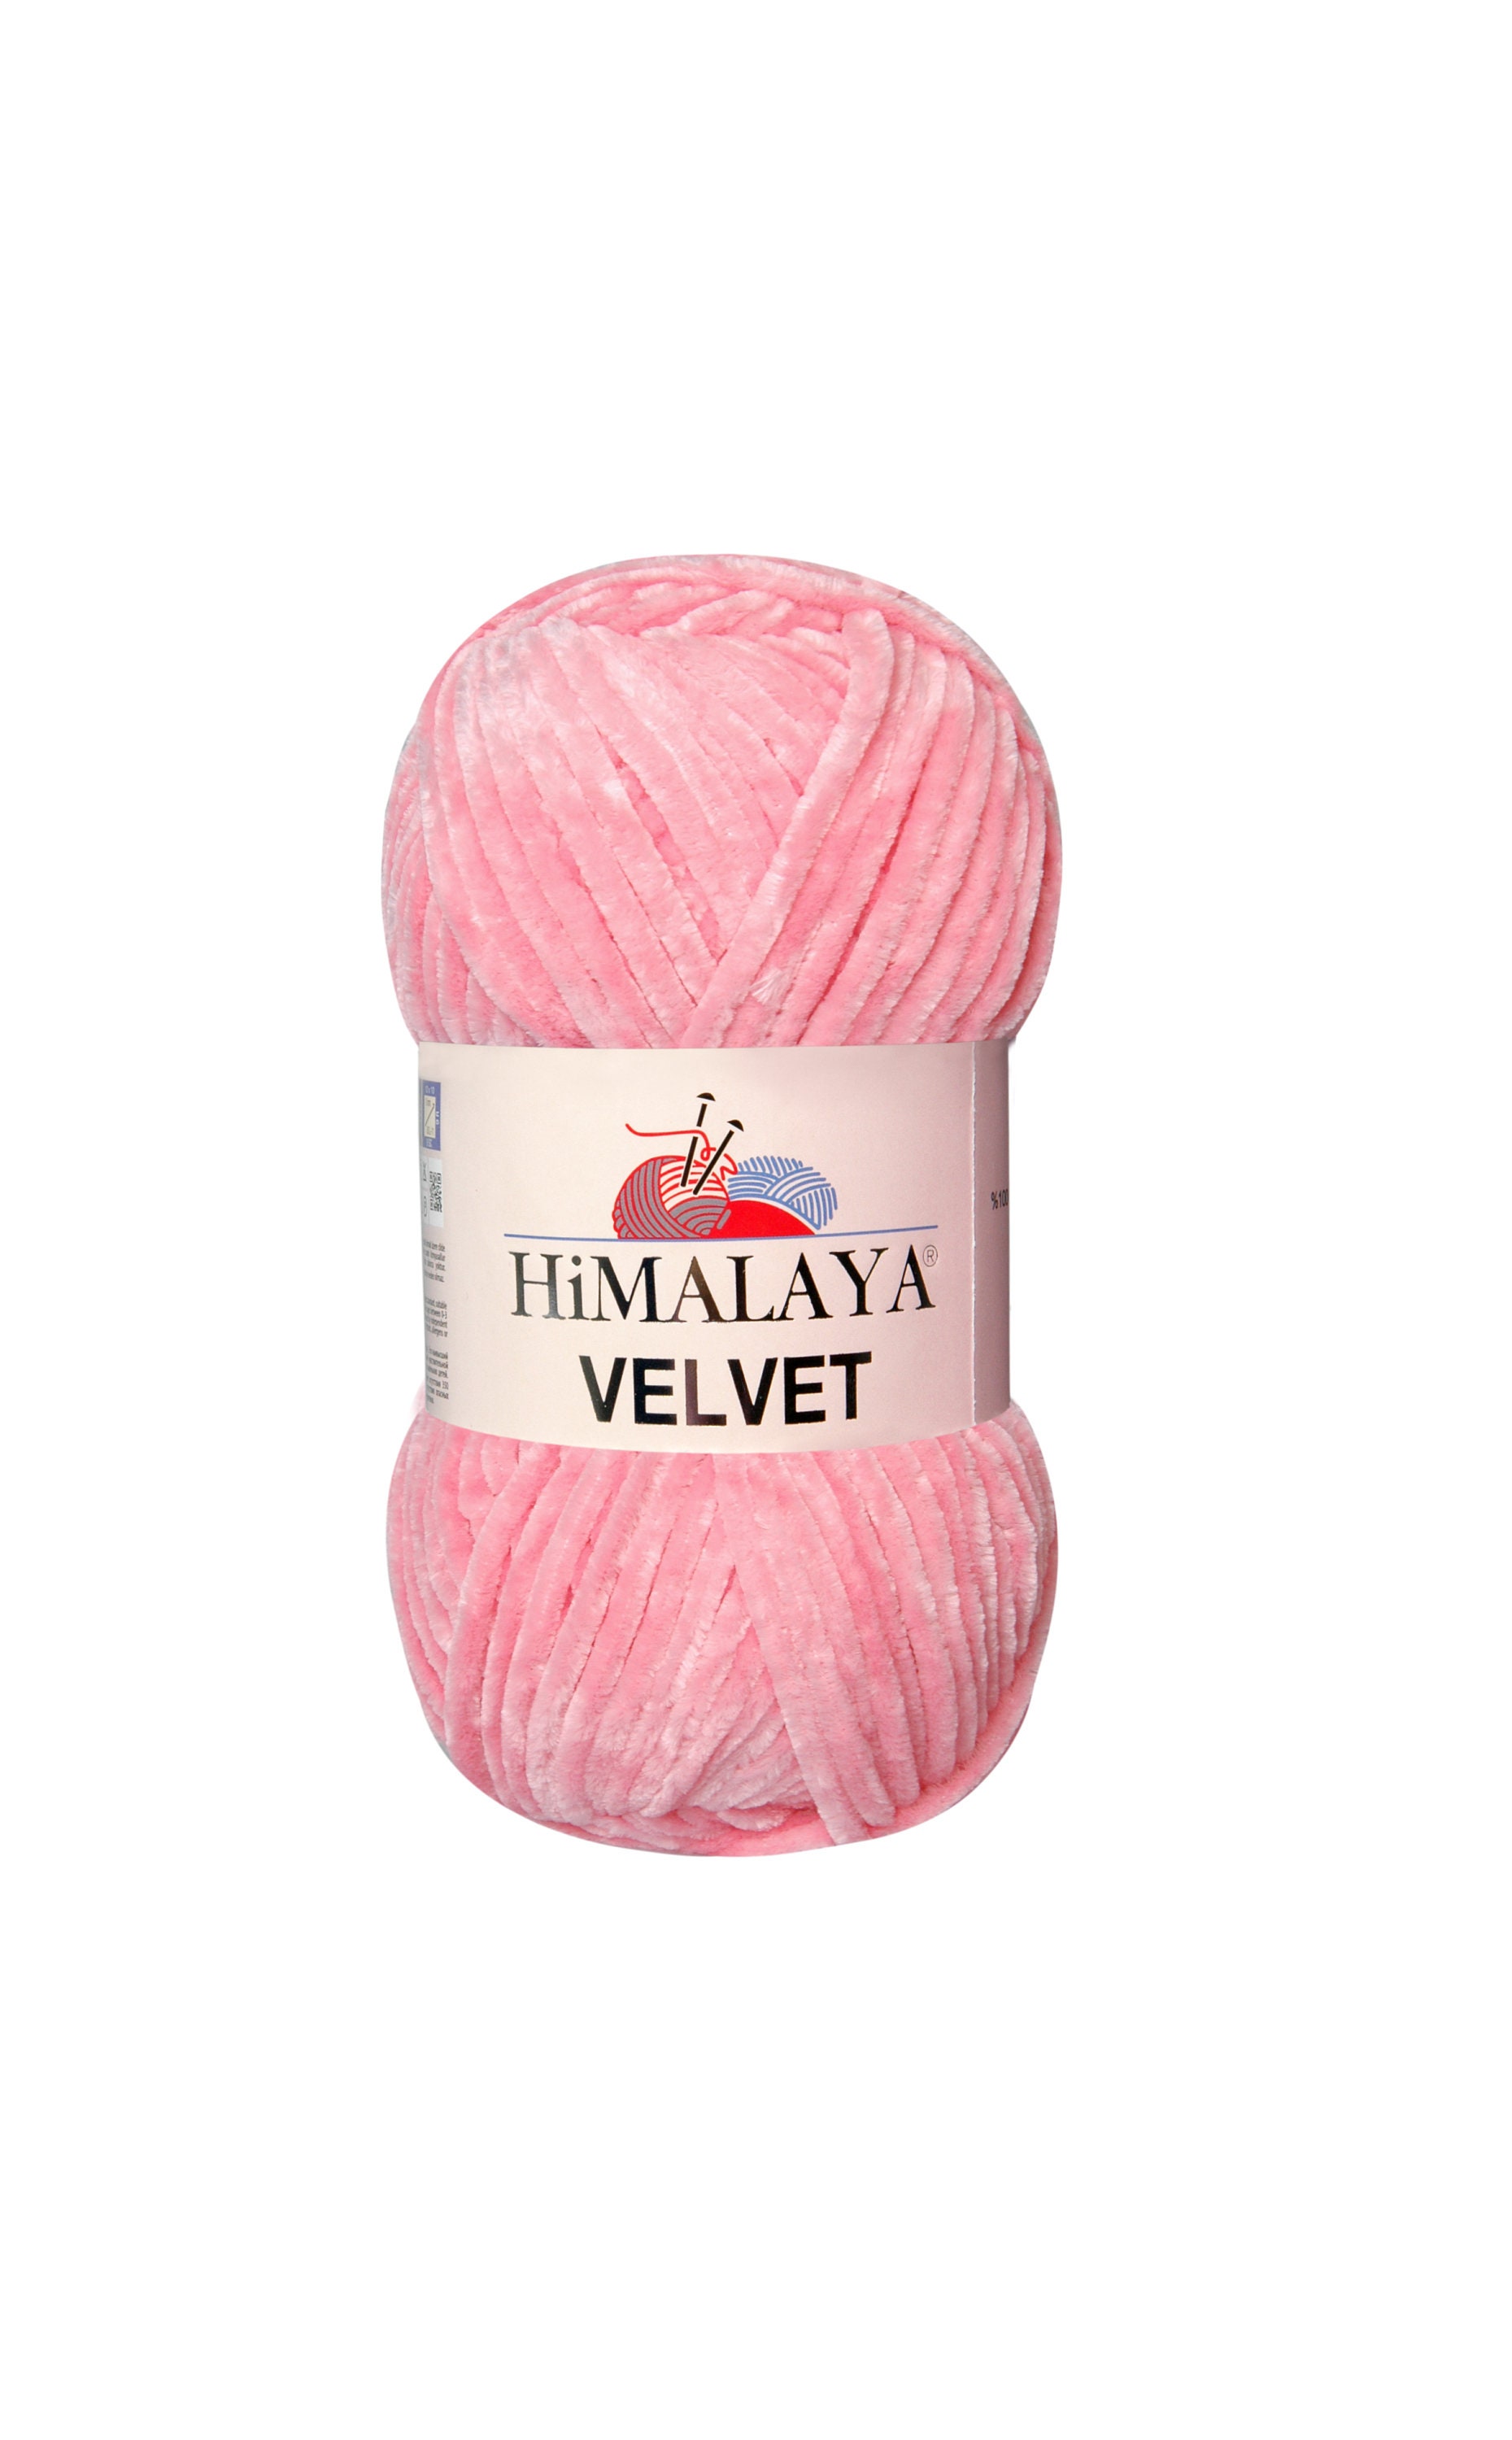 Himalaya Dolphin Baby, Baby Blanket Yarn, Velvet Yarn, Himalaya